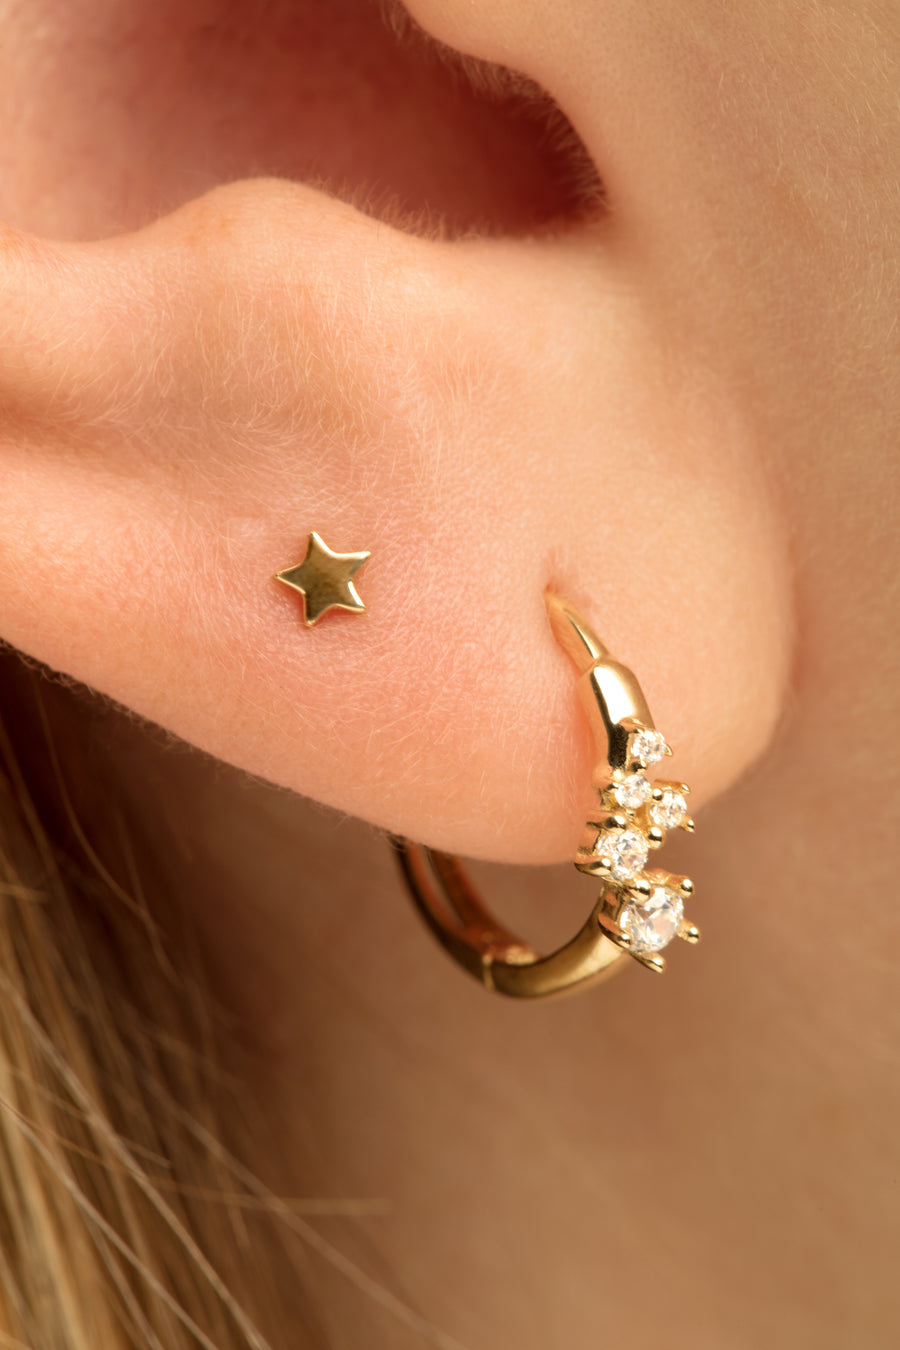 9ct Solid Gold Star Cartilage Bar Earring - ZuZu Jewellery